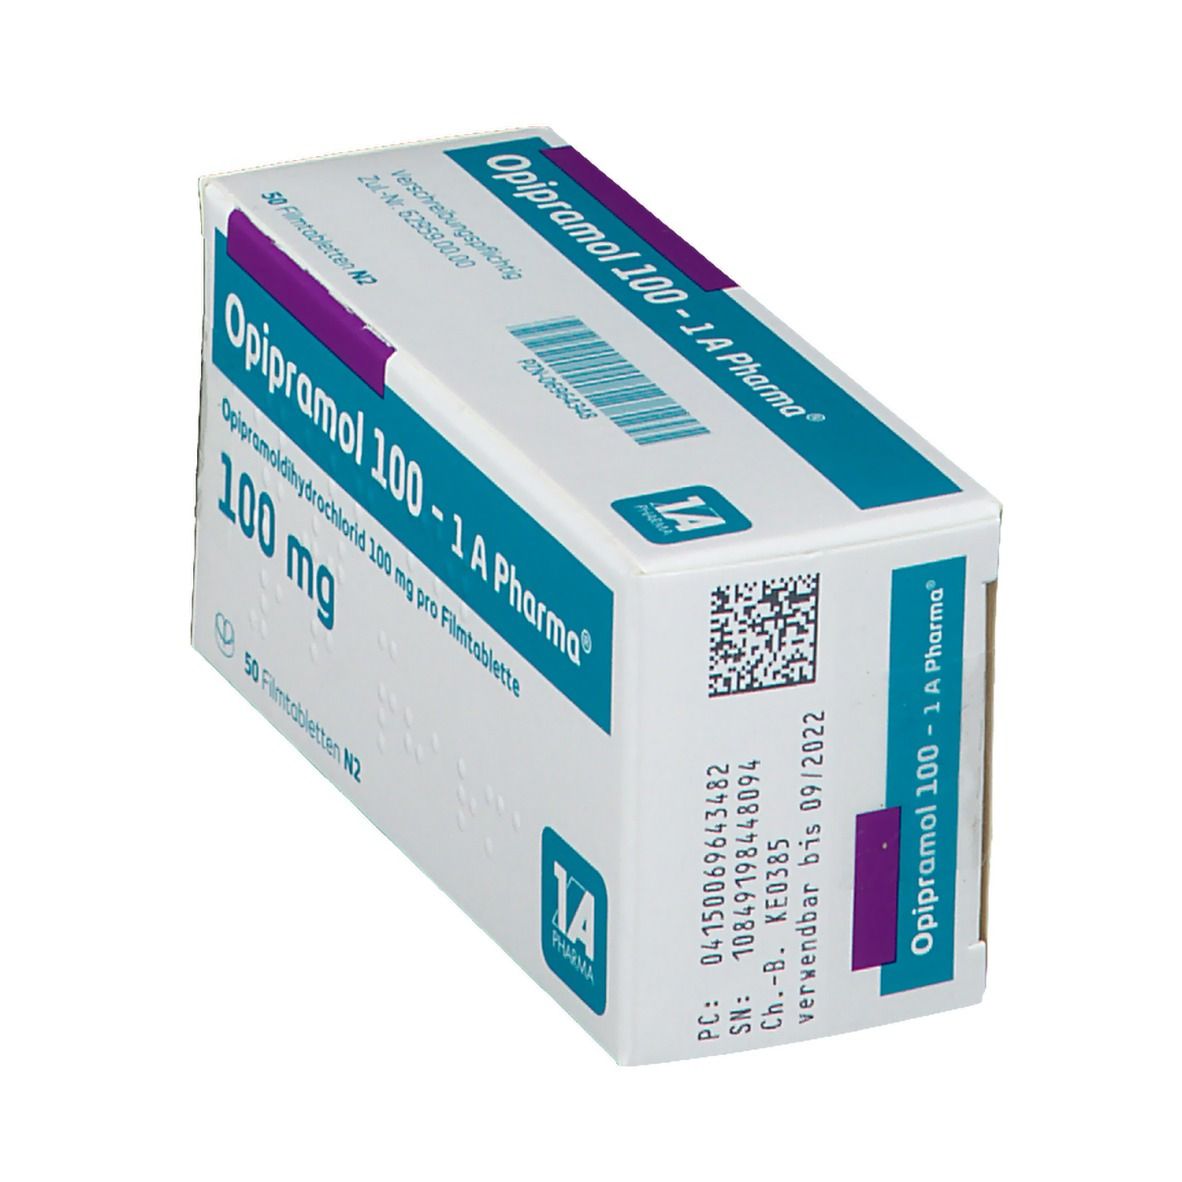 Opipramol 1A Pharma® 100Mg